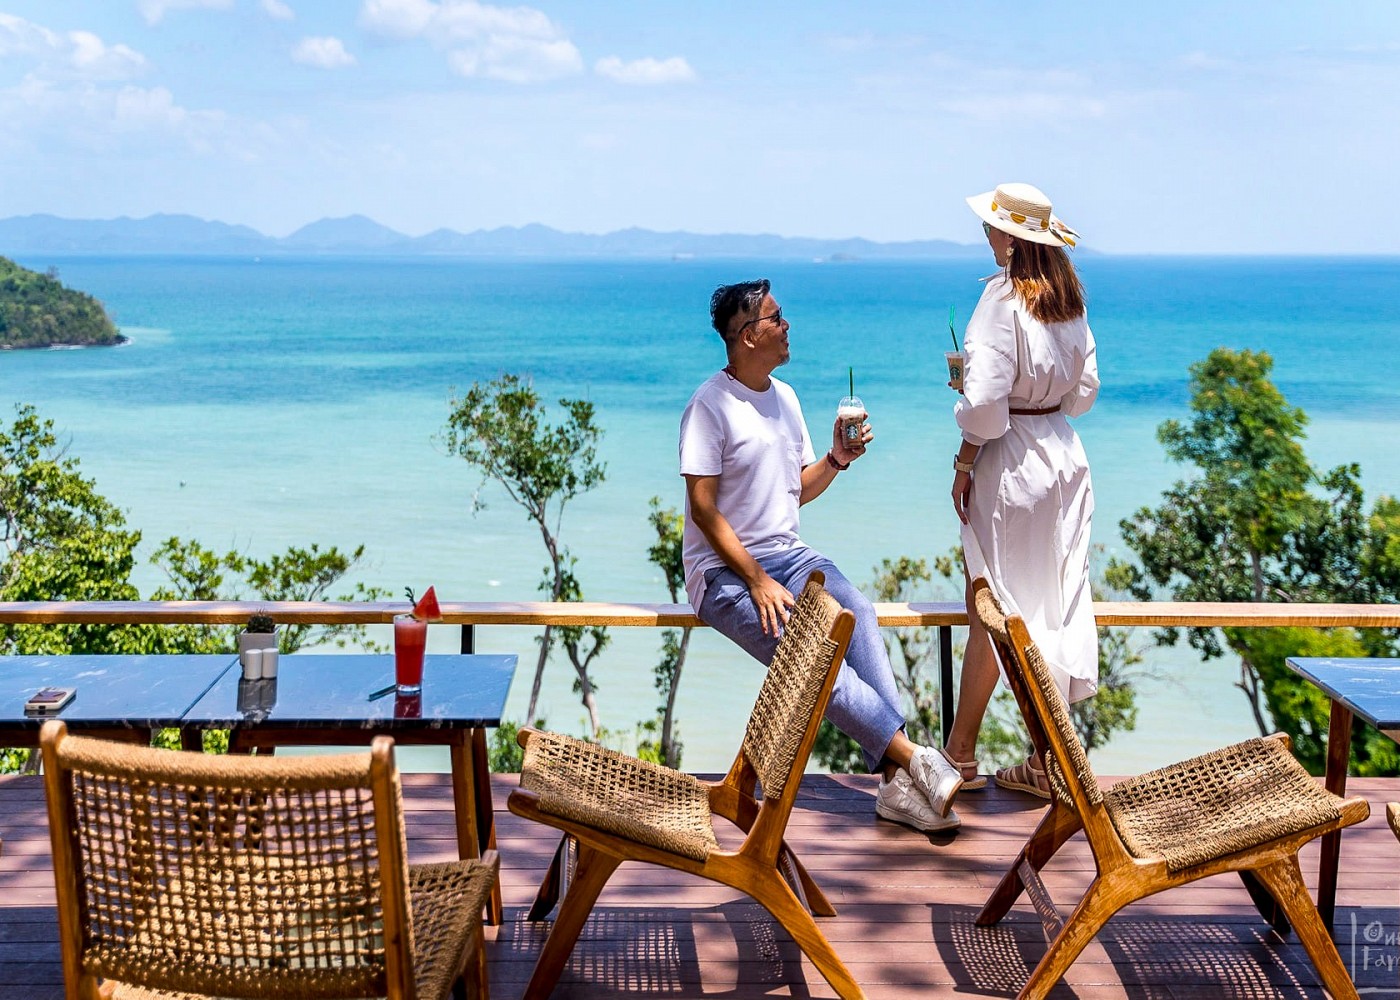 Sinae Phuket: Elevating Thai Hospitality – Design Hotel Silver Award Winner at the 14th Thailand Tourism Awards 2023